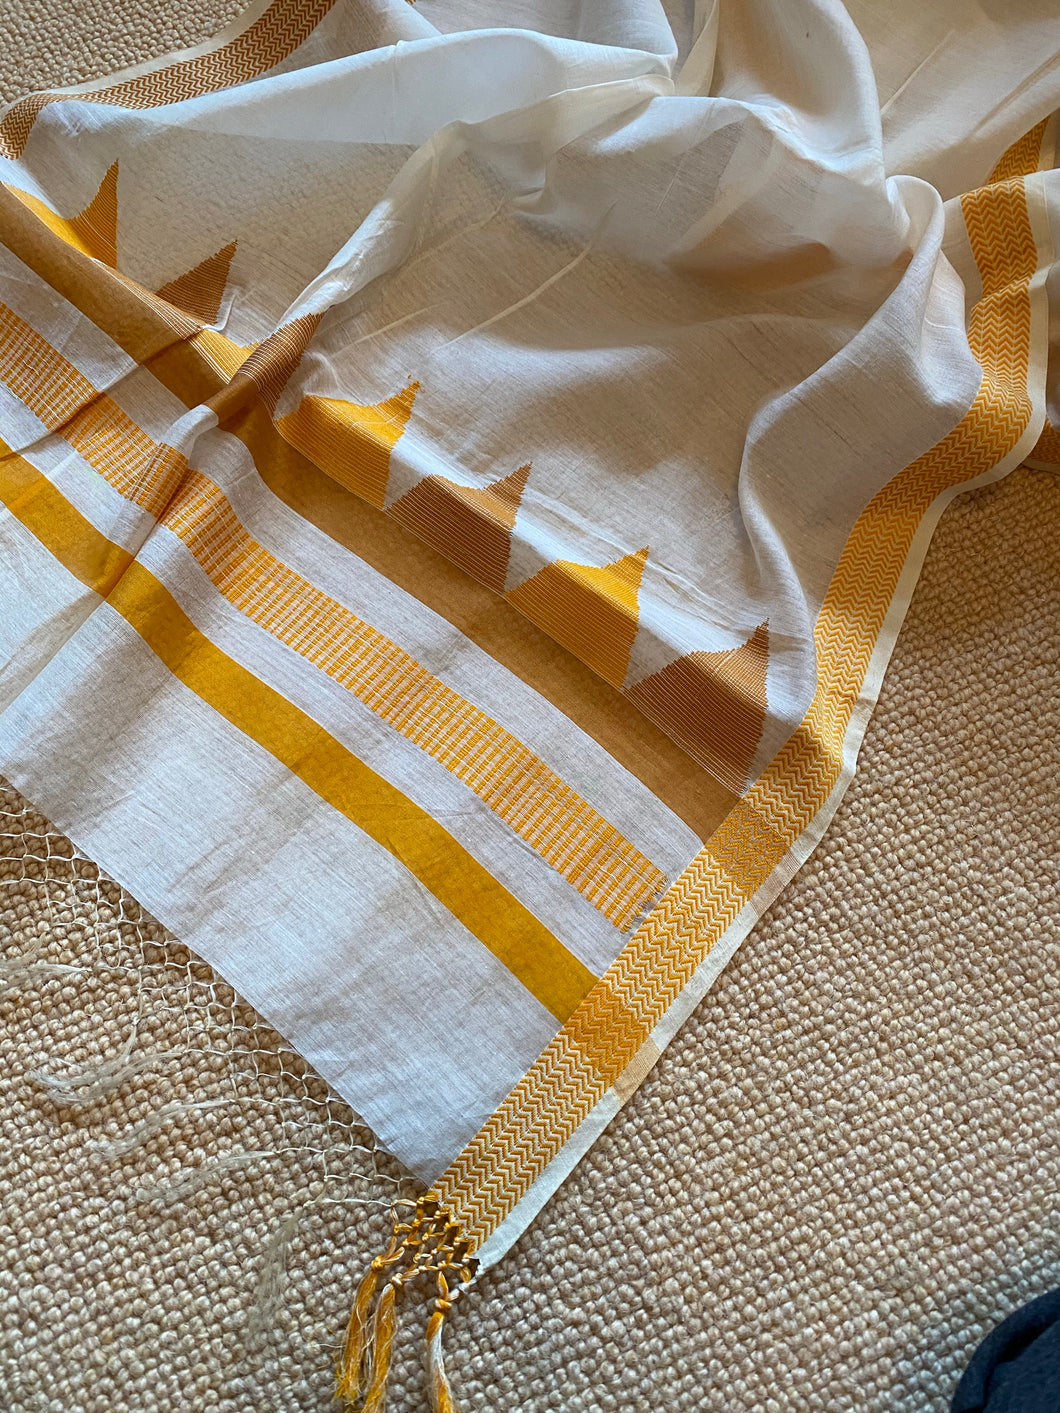 SP105 Fine cotton tangerine and cinnamon angled pattern on cream tassled scarf